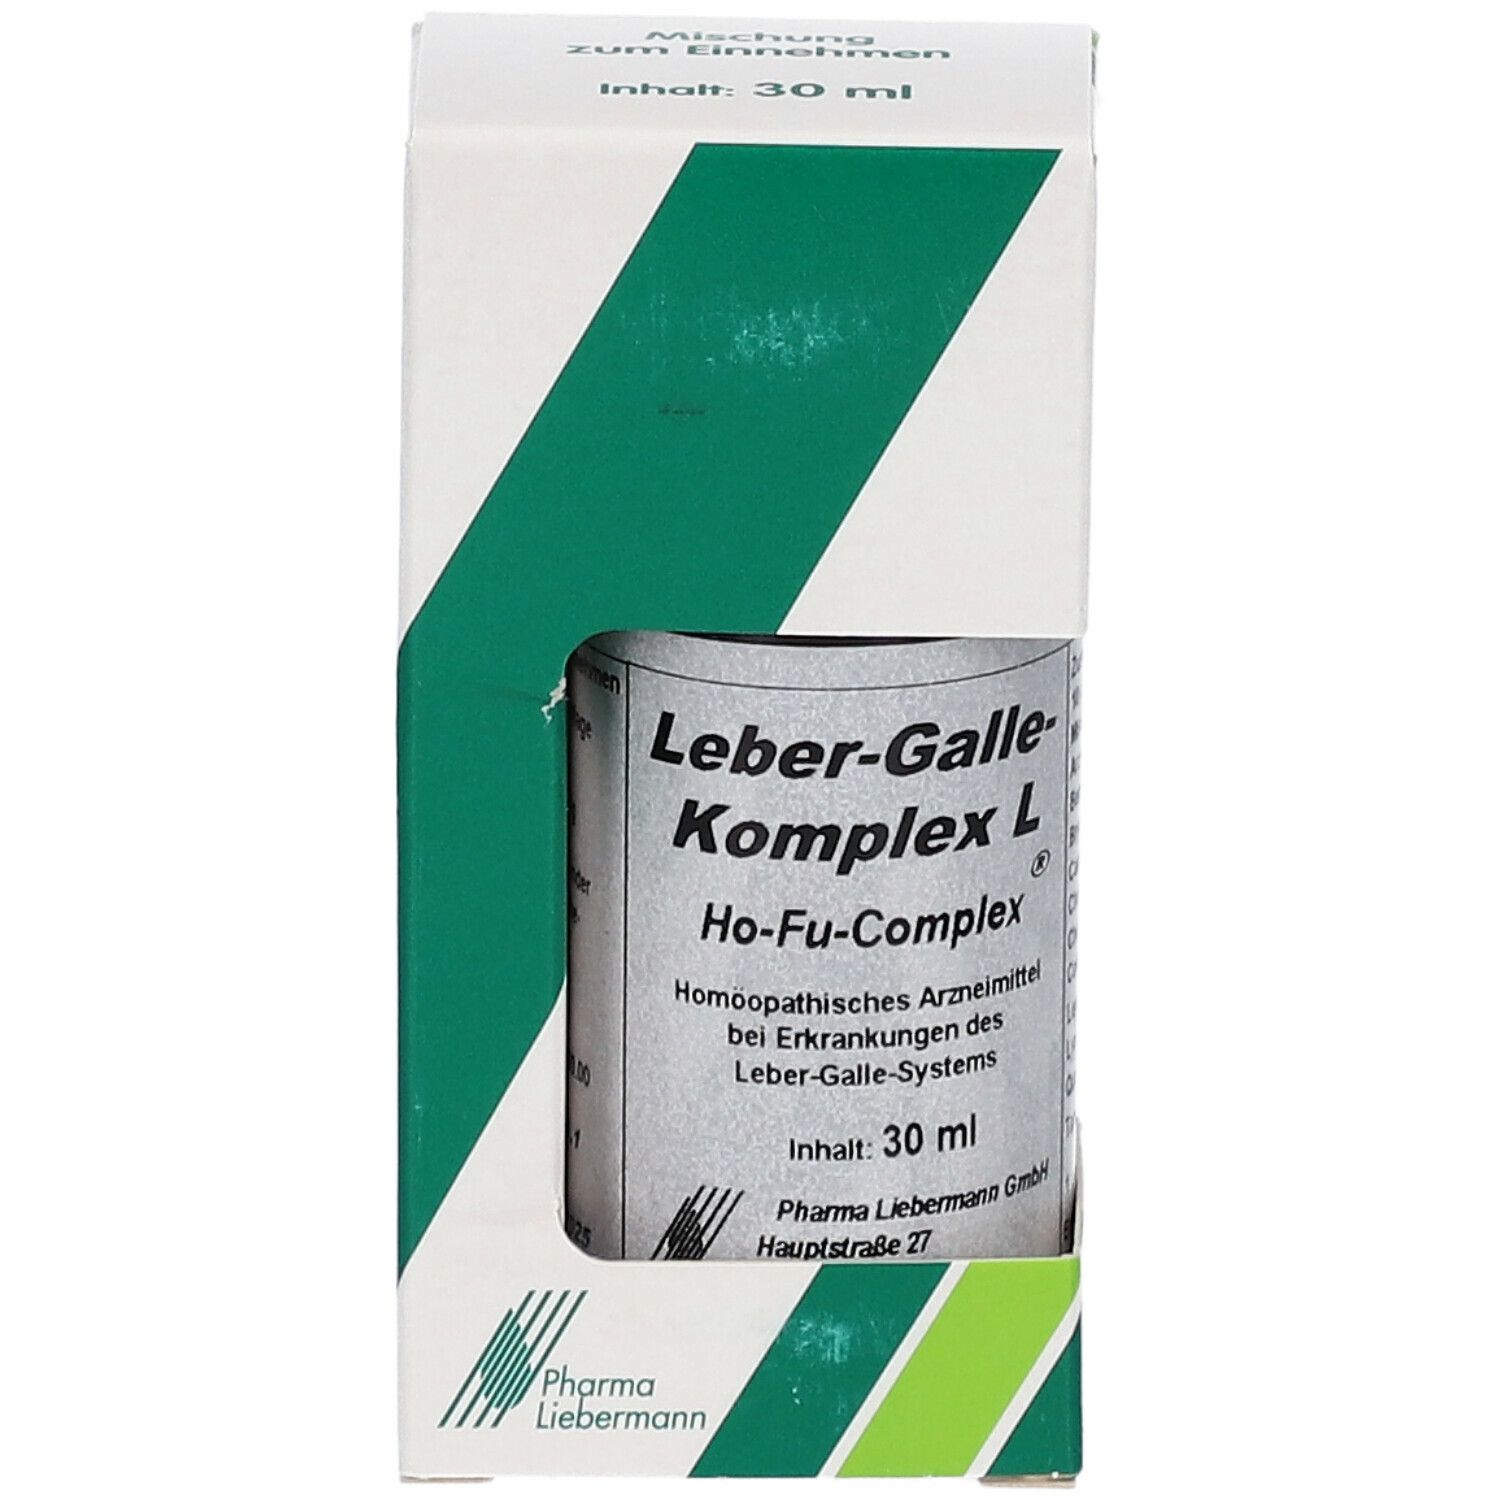 Leber-Galle-Komplex L